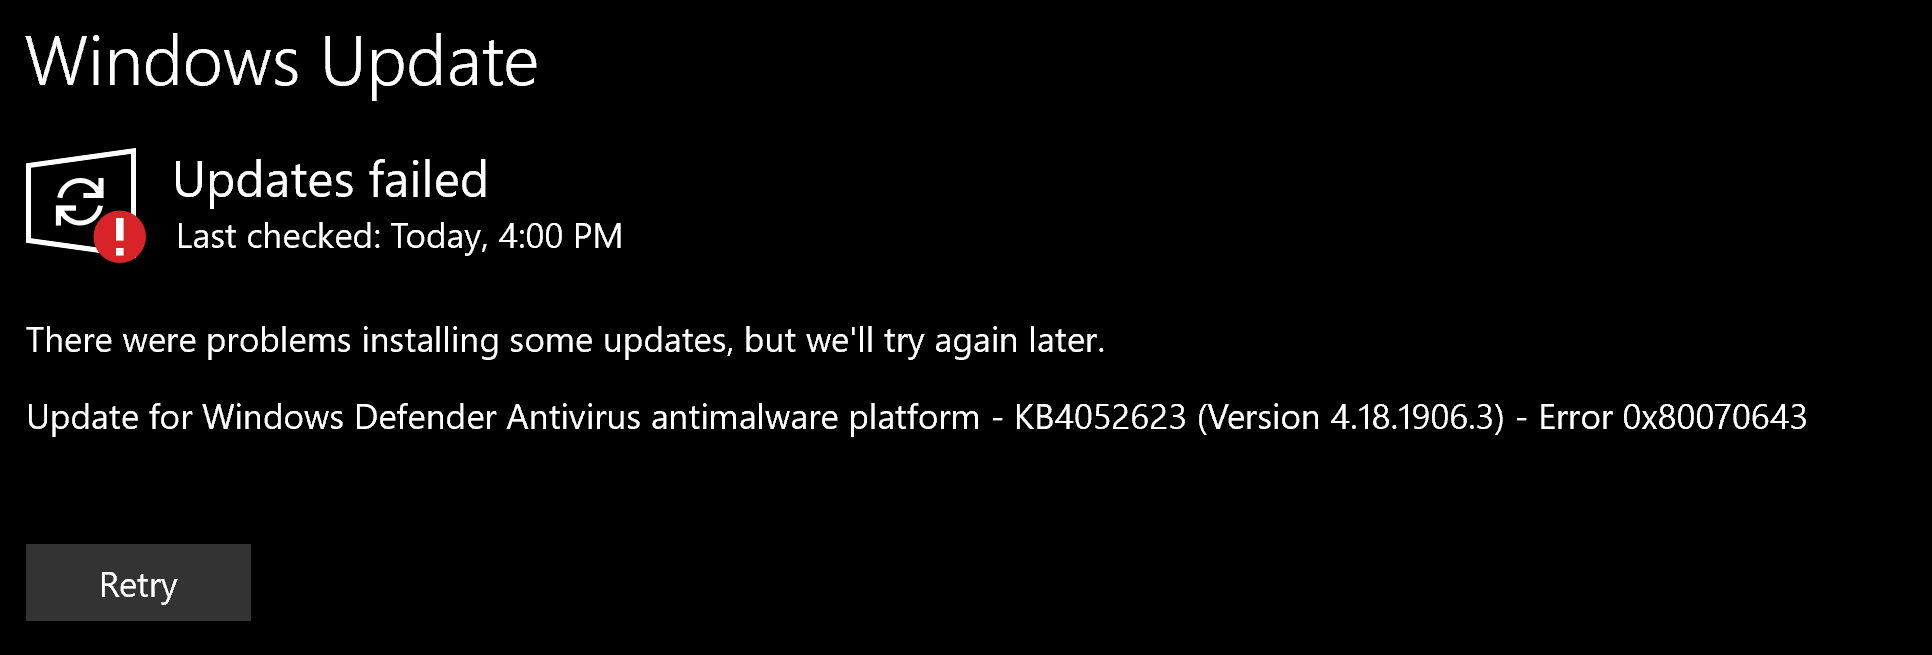 Update for Windows Defender Antivirus antimalware platform - KB4052623 (Version... a3aeec7e-9e70-49c8-9f8d-bb4d84b4afa0?upload=true.png